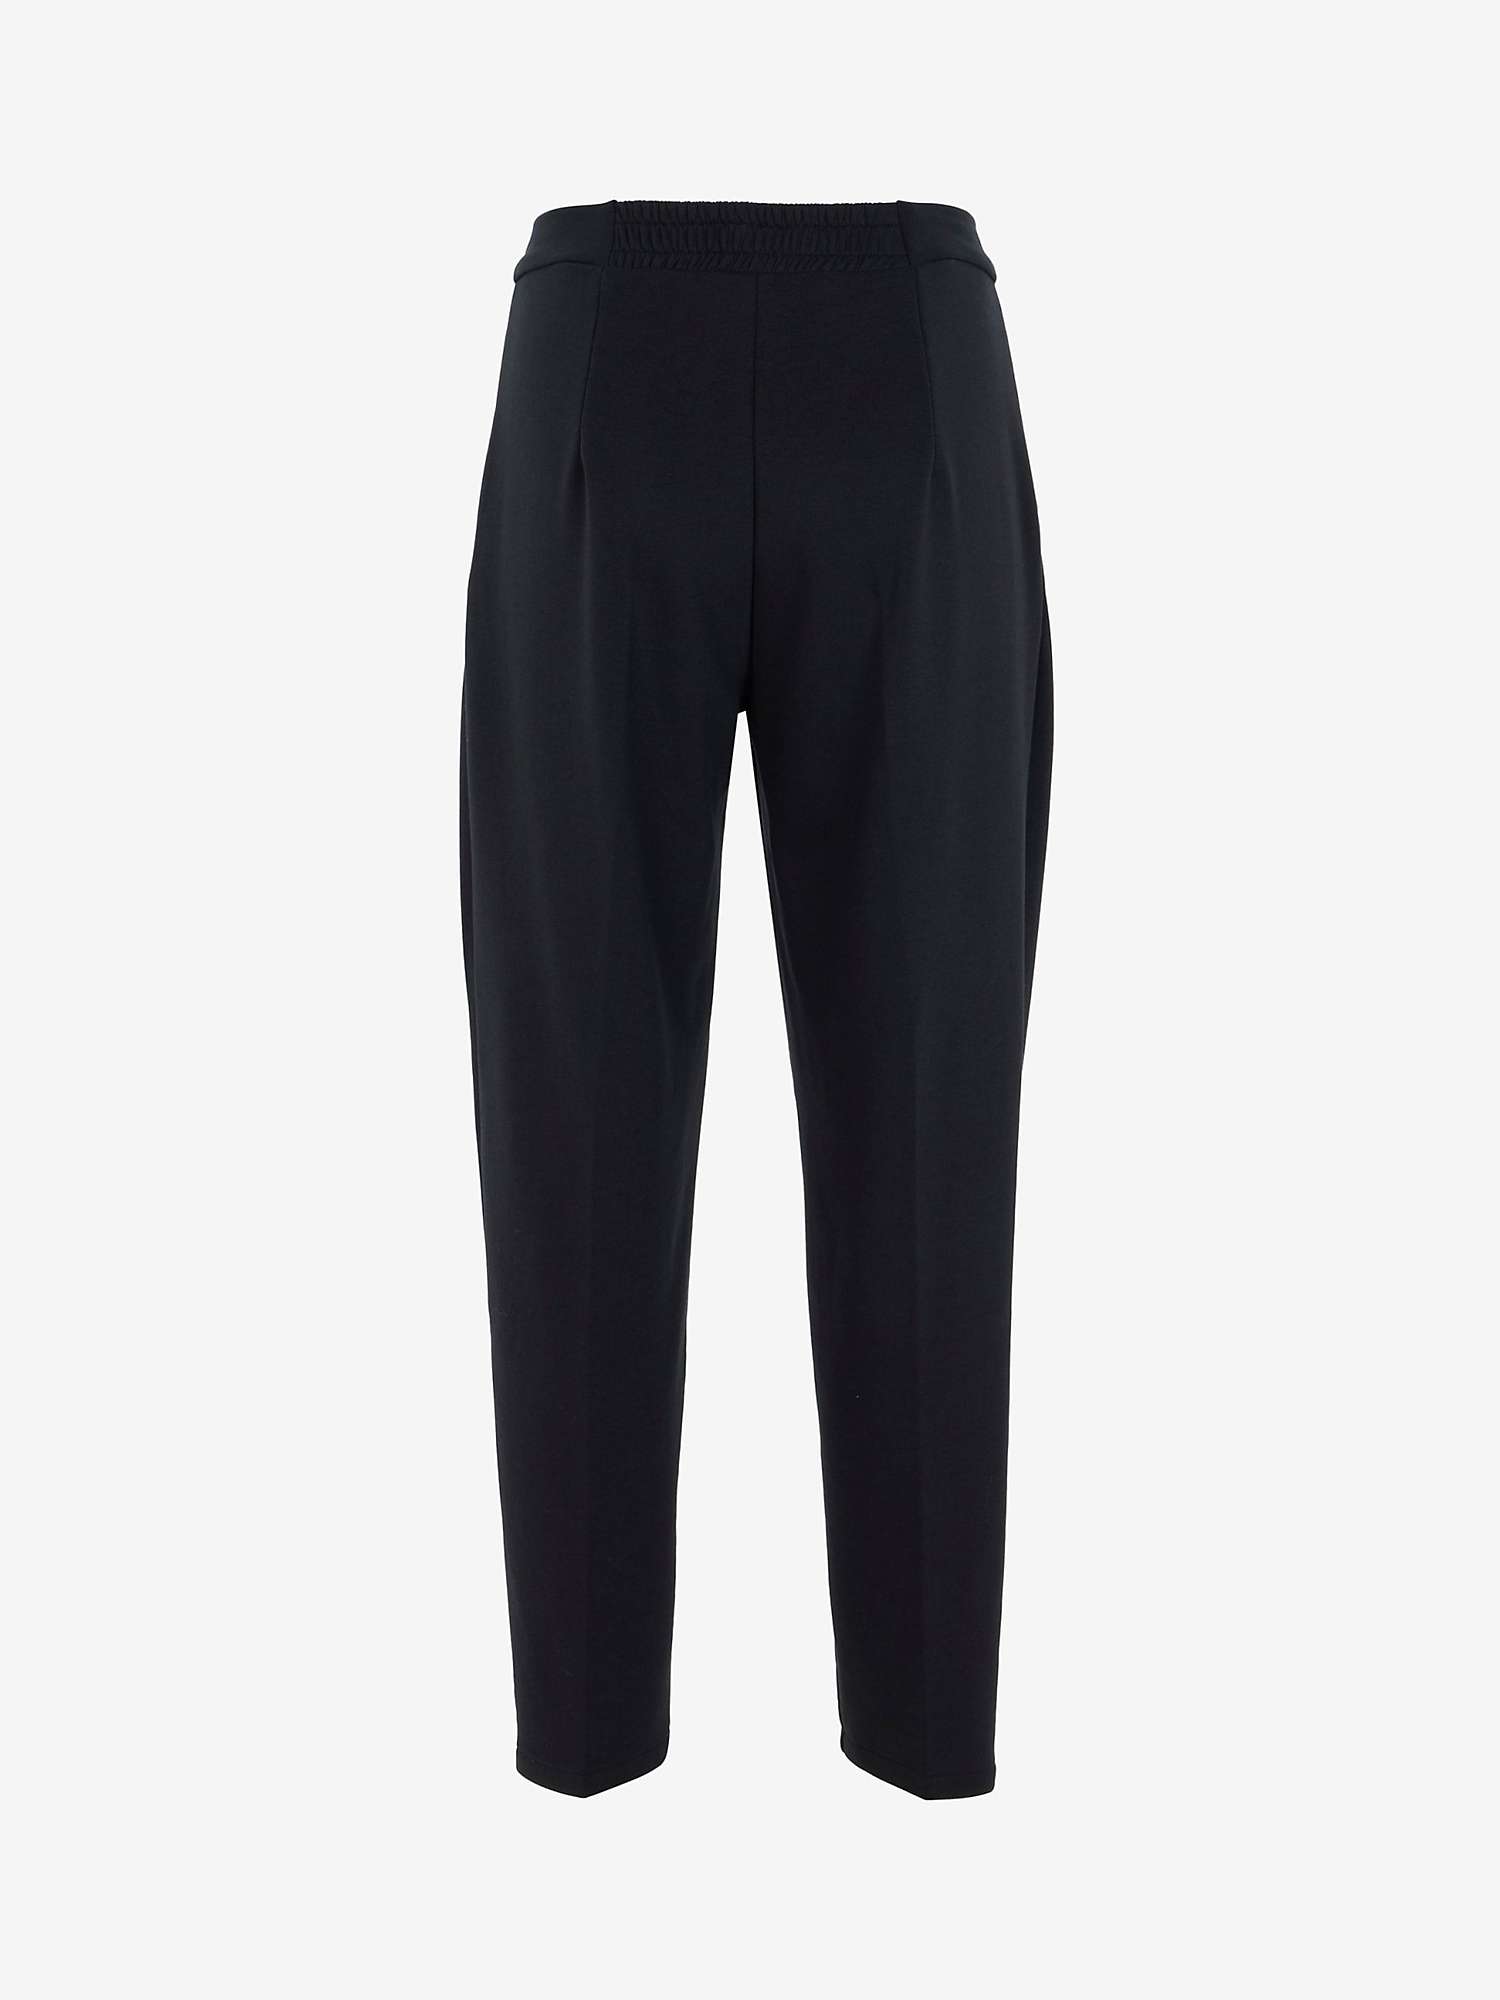 Buy Mint Velvet Jersey Tapered Trousers, Black Online at johnlewis.com